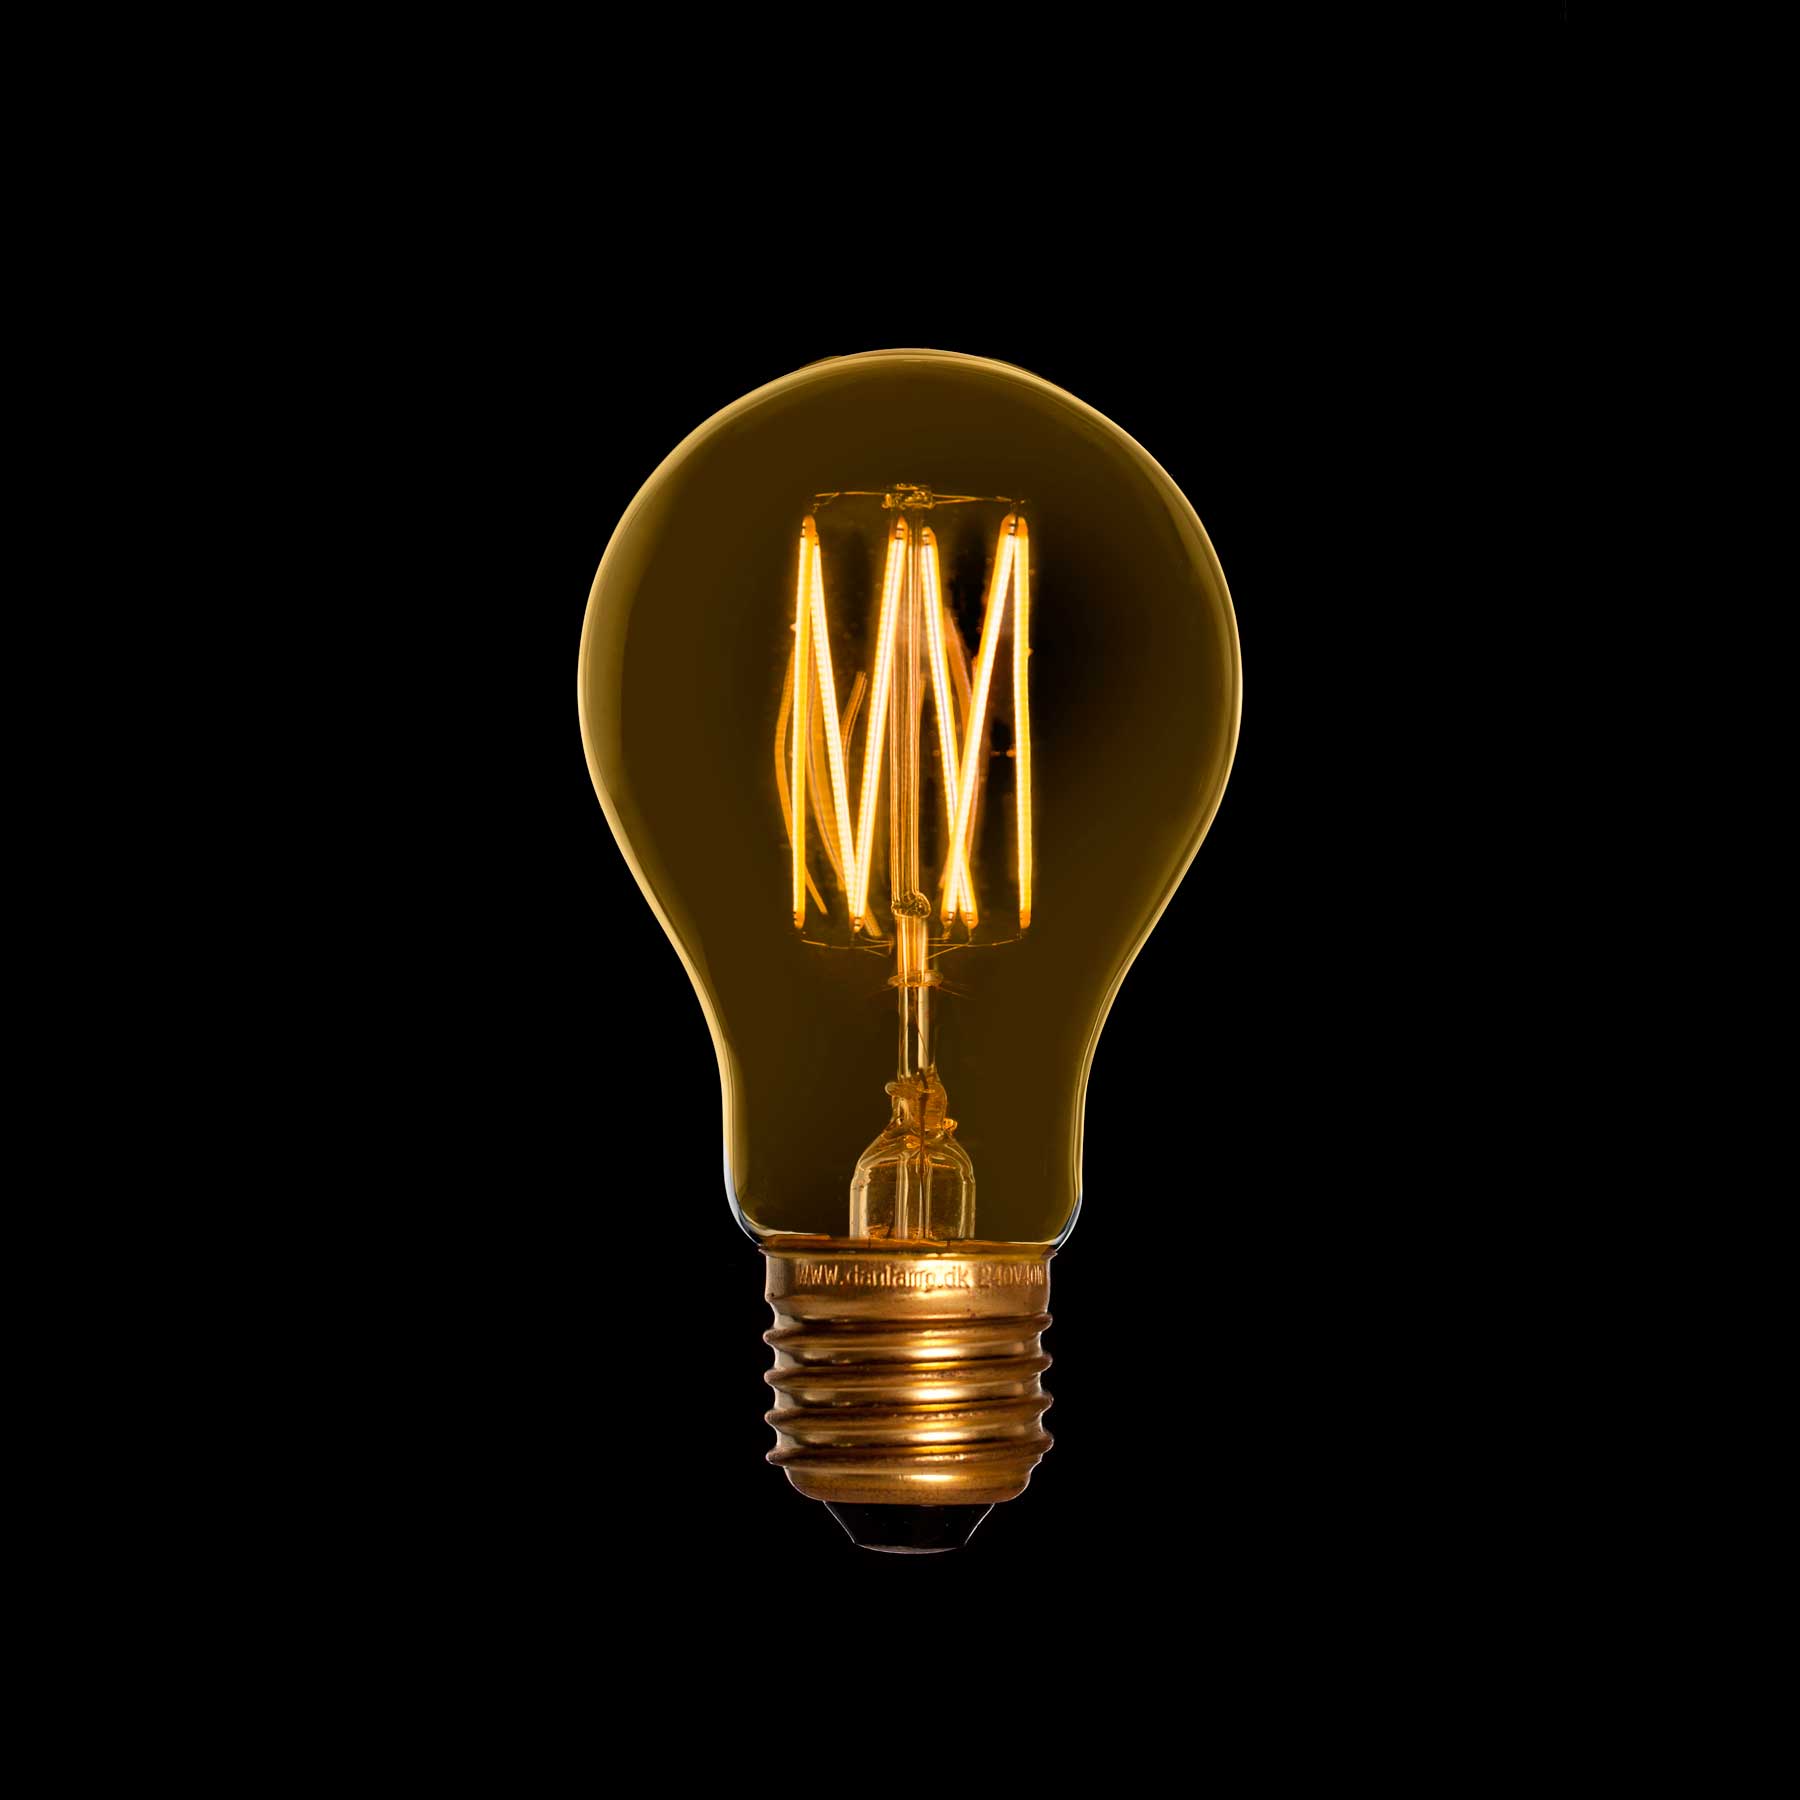 LED Filament Glühbirne | Standard de Luxe Gold